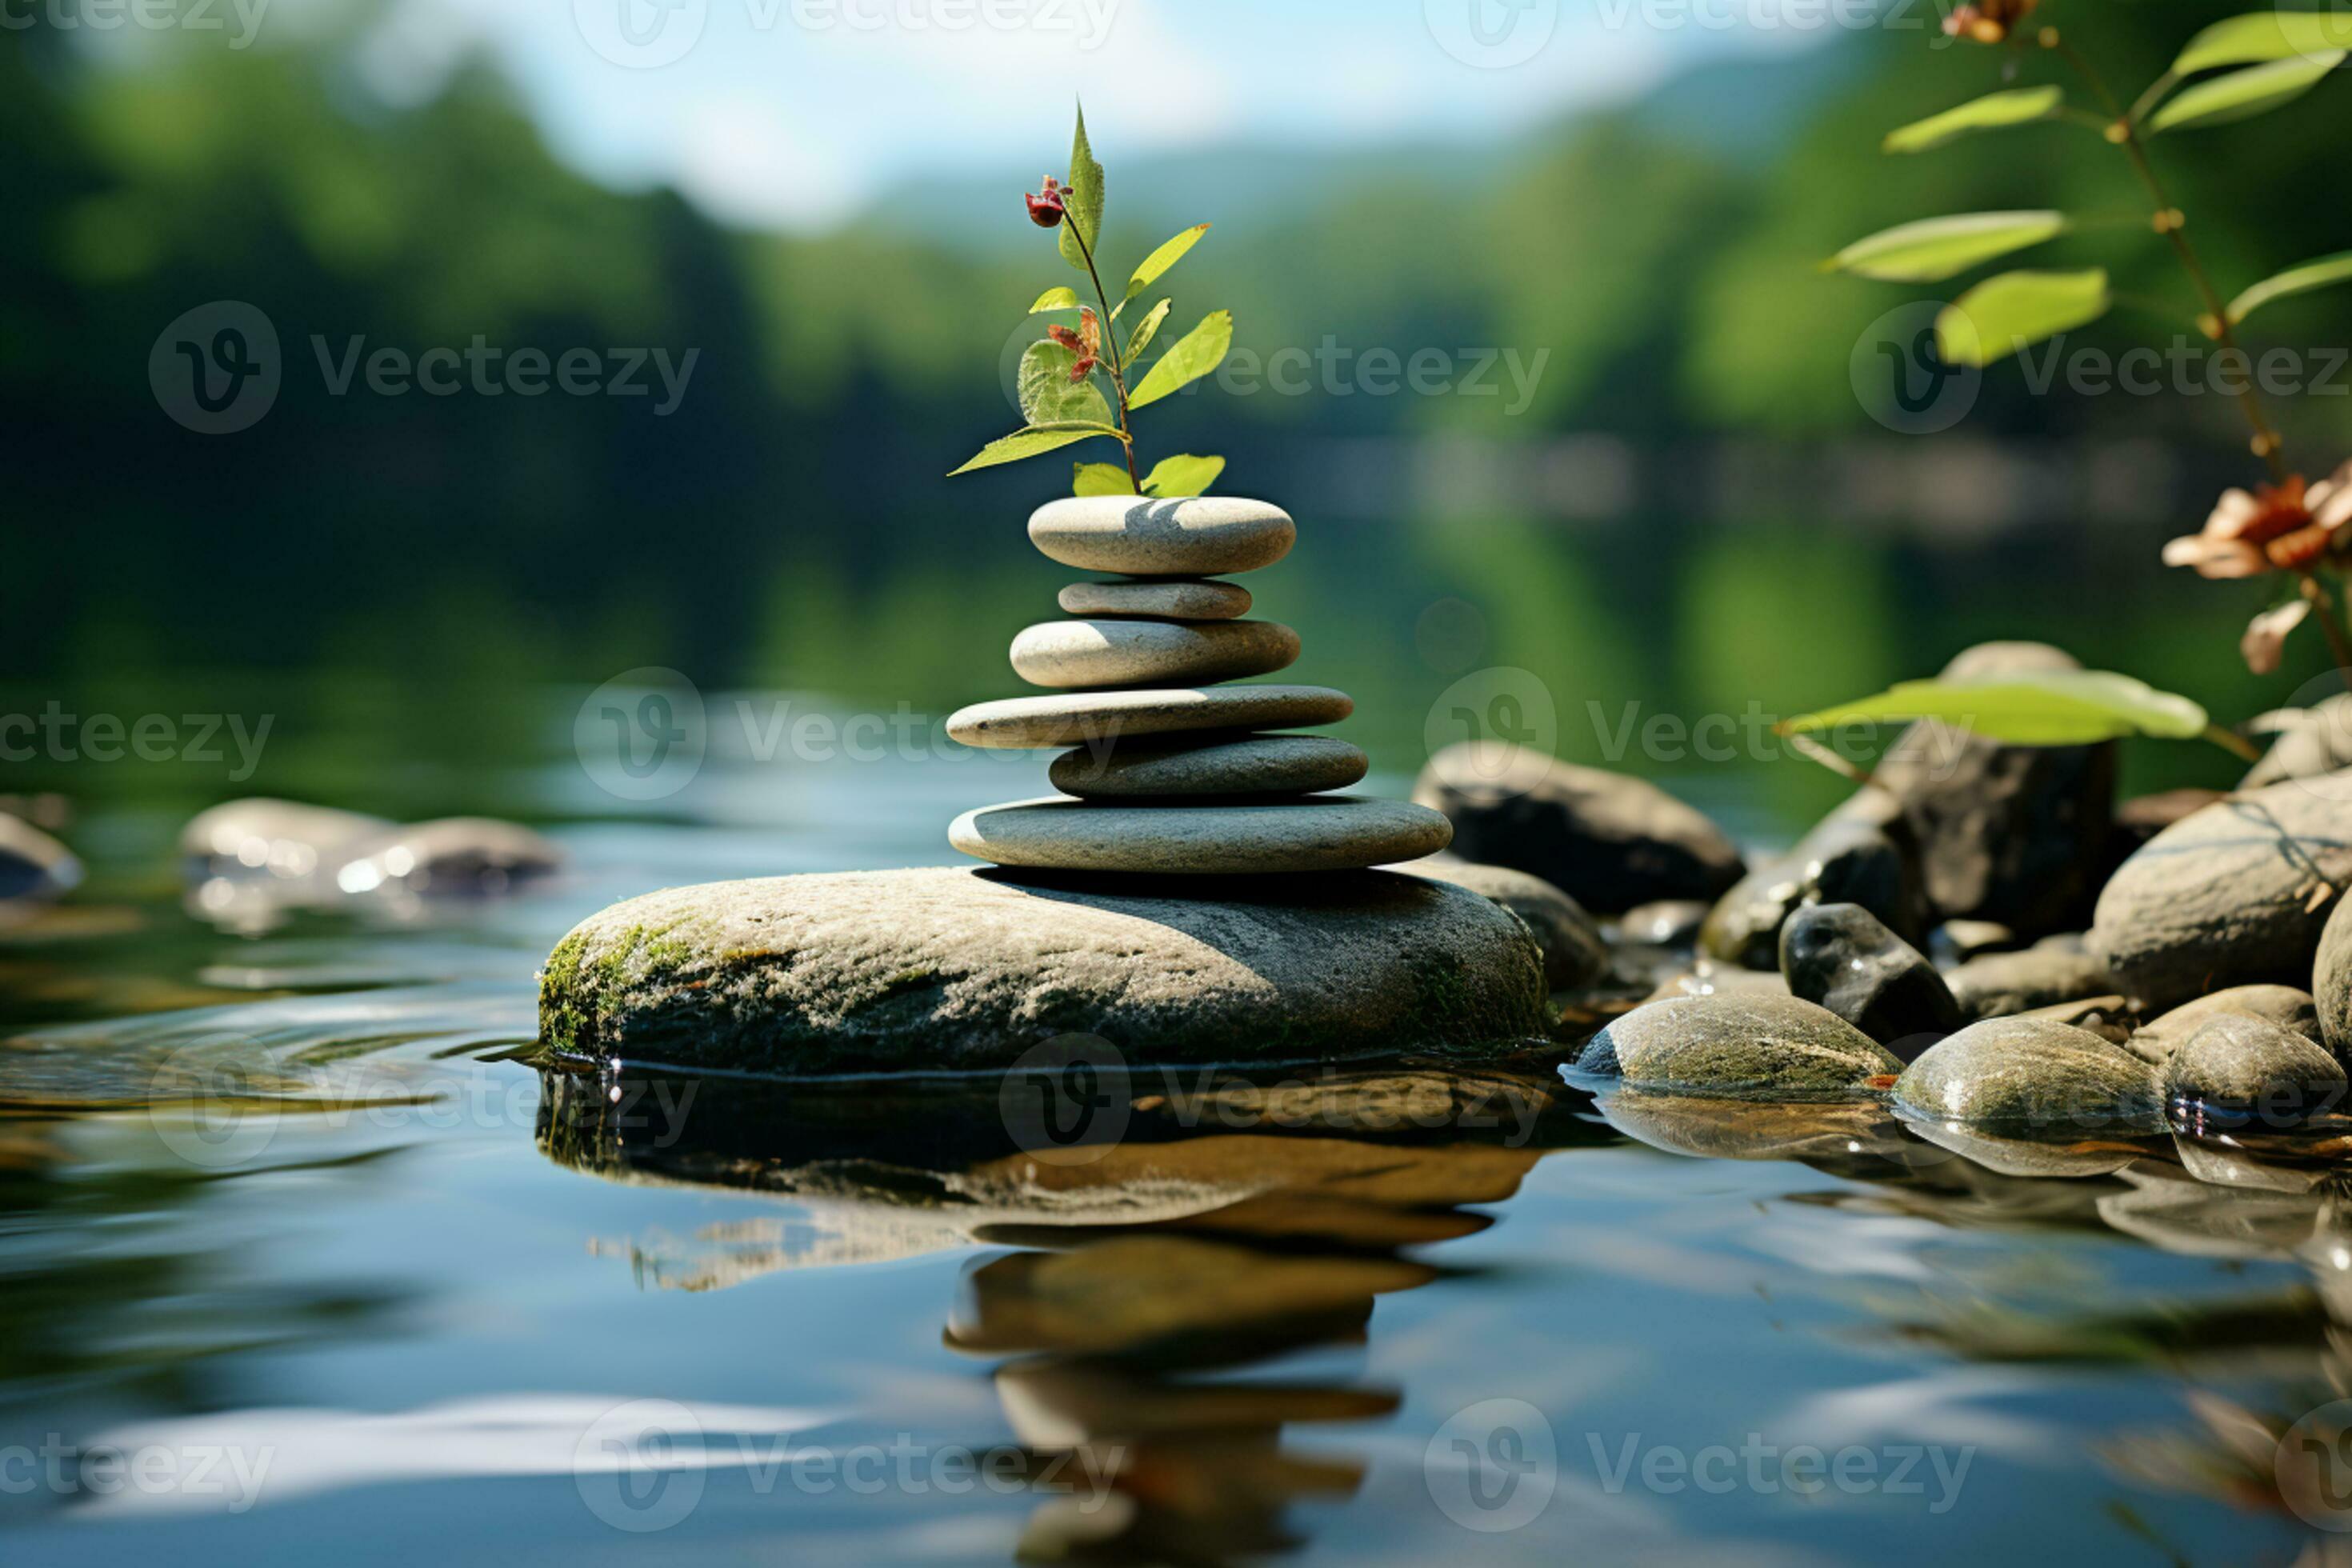 Serene Zen oasis, spiritually uplifting, balanced stone art